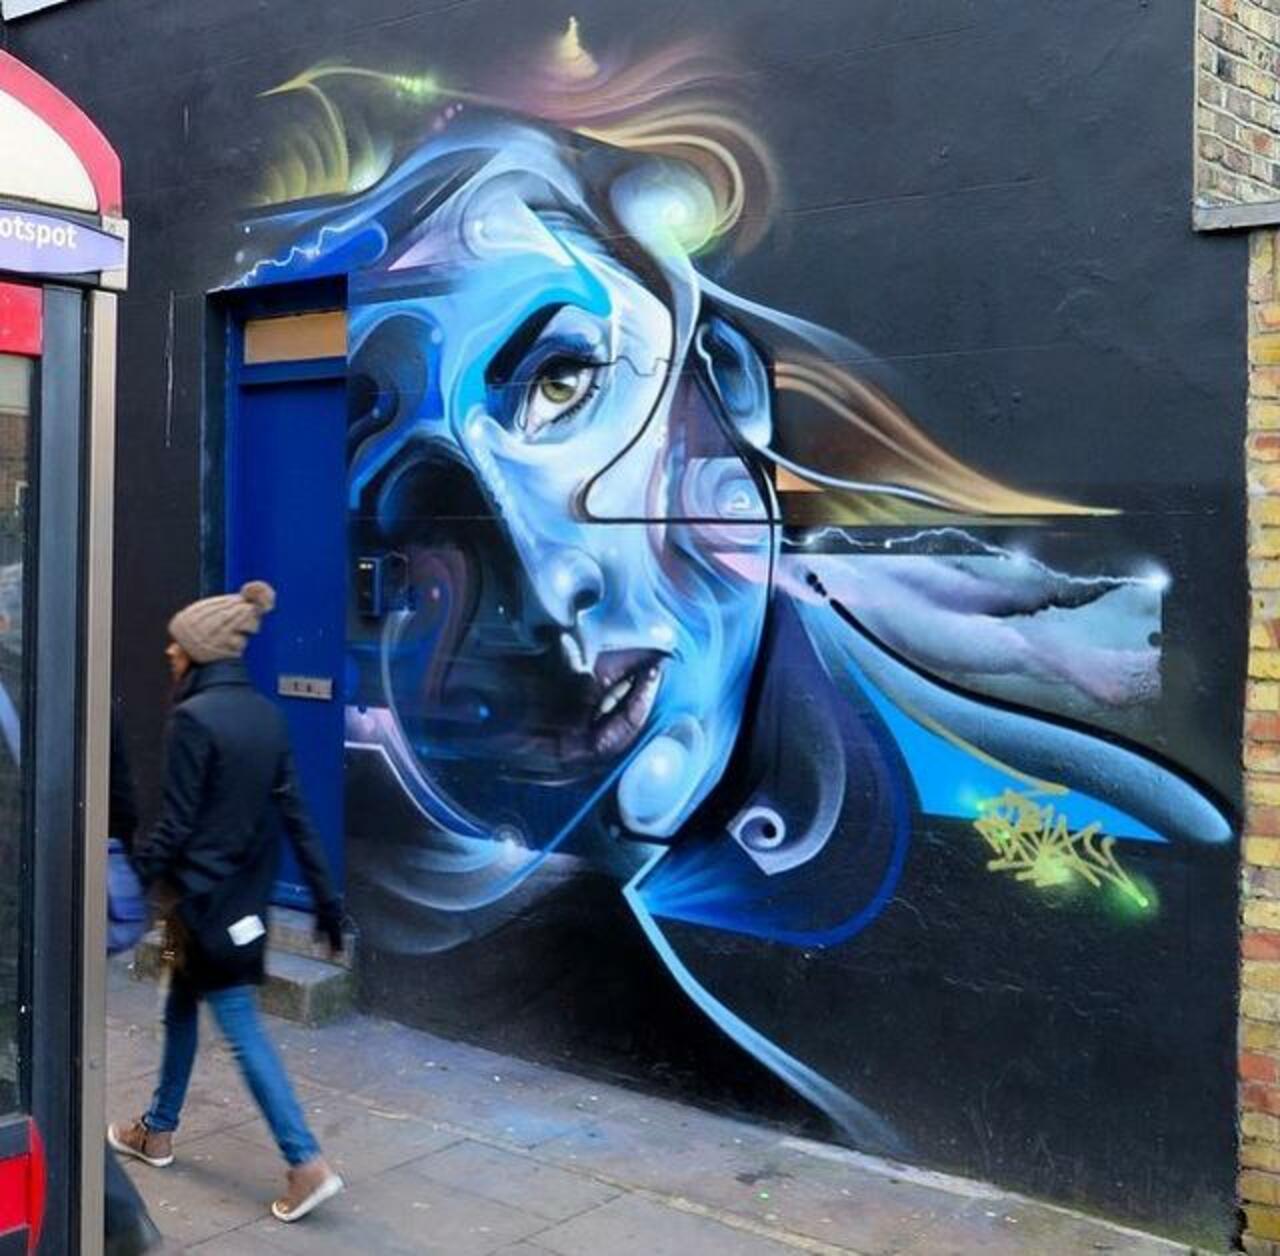 Beautiful! RT! "@GoogleStreetArt: Street Art by MrCenzOne 

#art #arte #graffiti #streetart http://t.co/7bSH4N8poF”